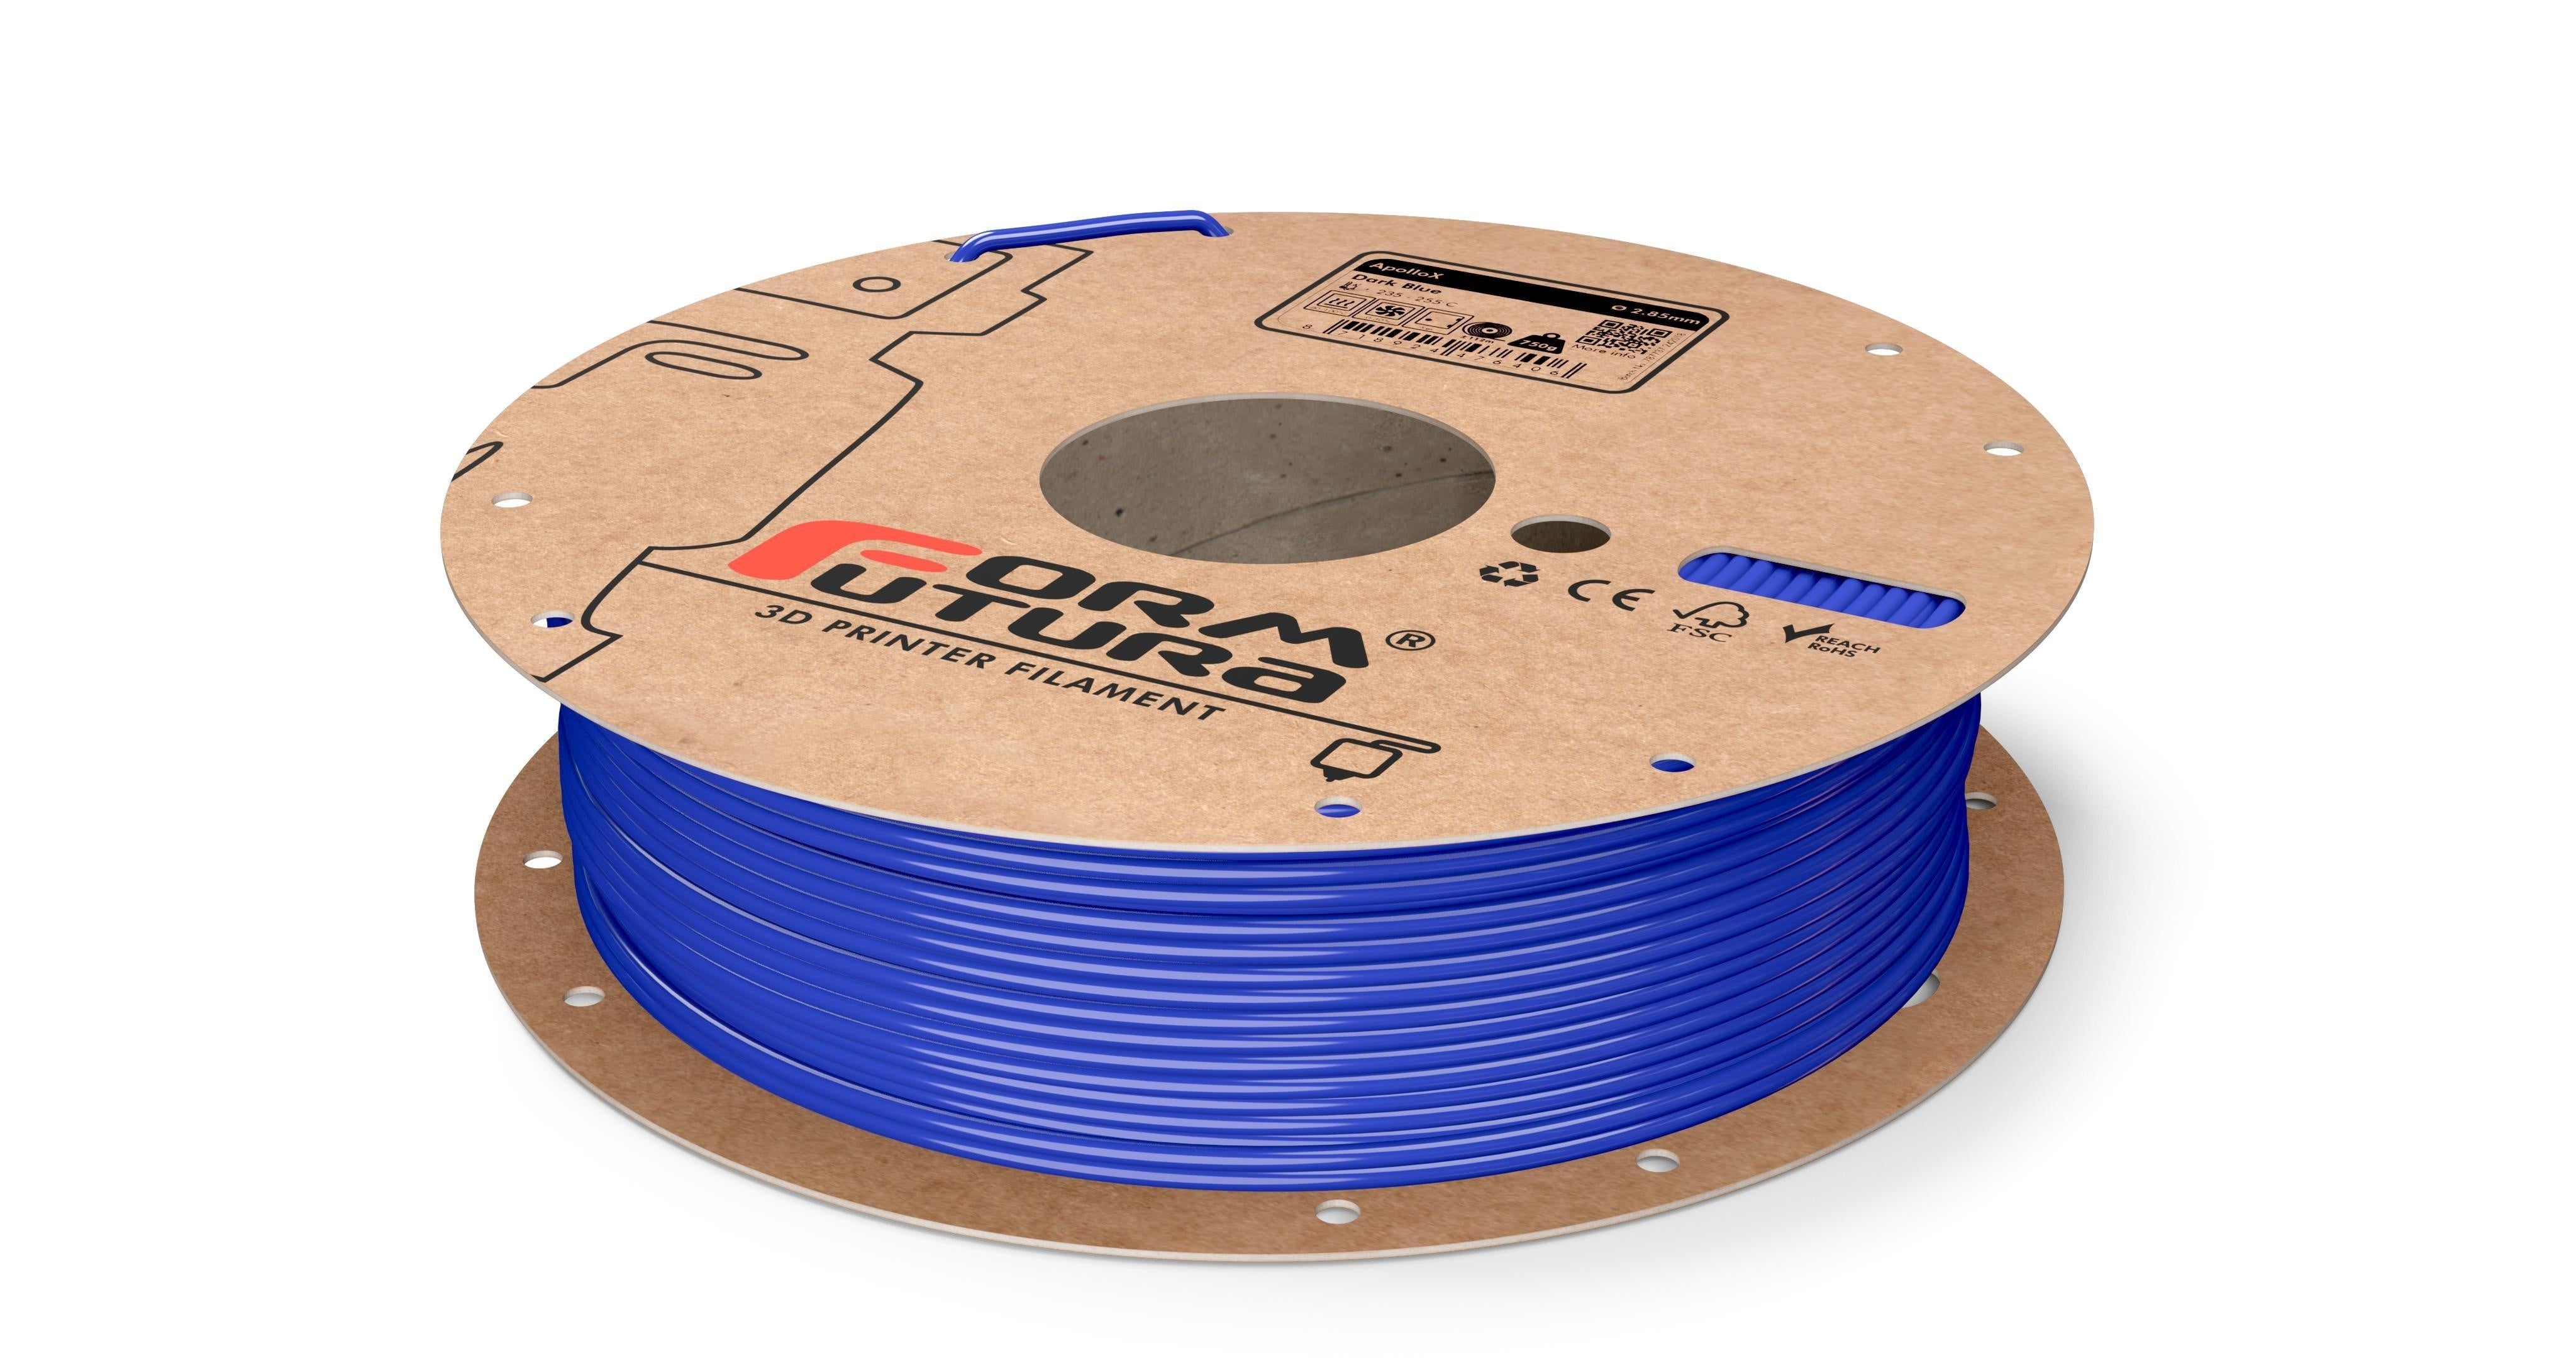 ASA Filament FormFortura ApolloX available in 7 colors - 3D Printer Filament FORMFUTURA